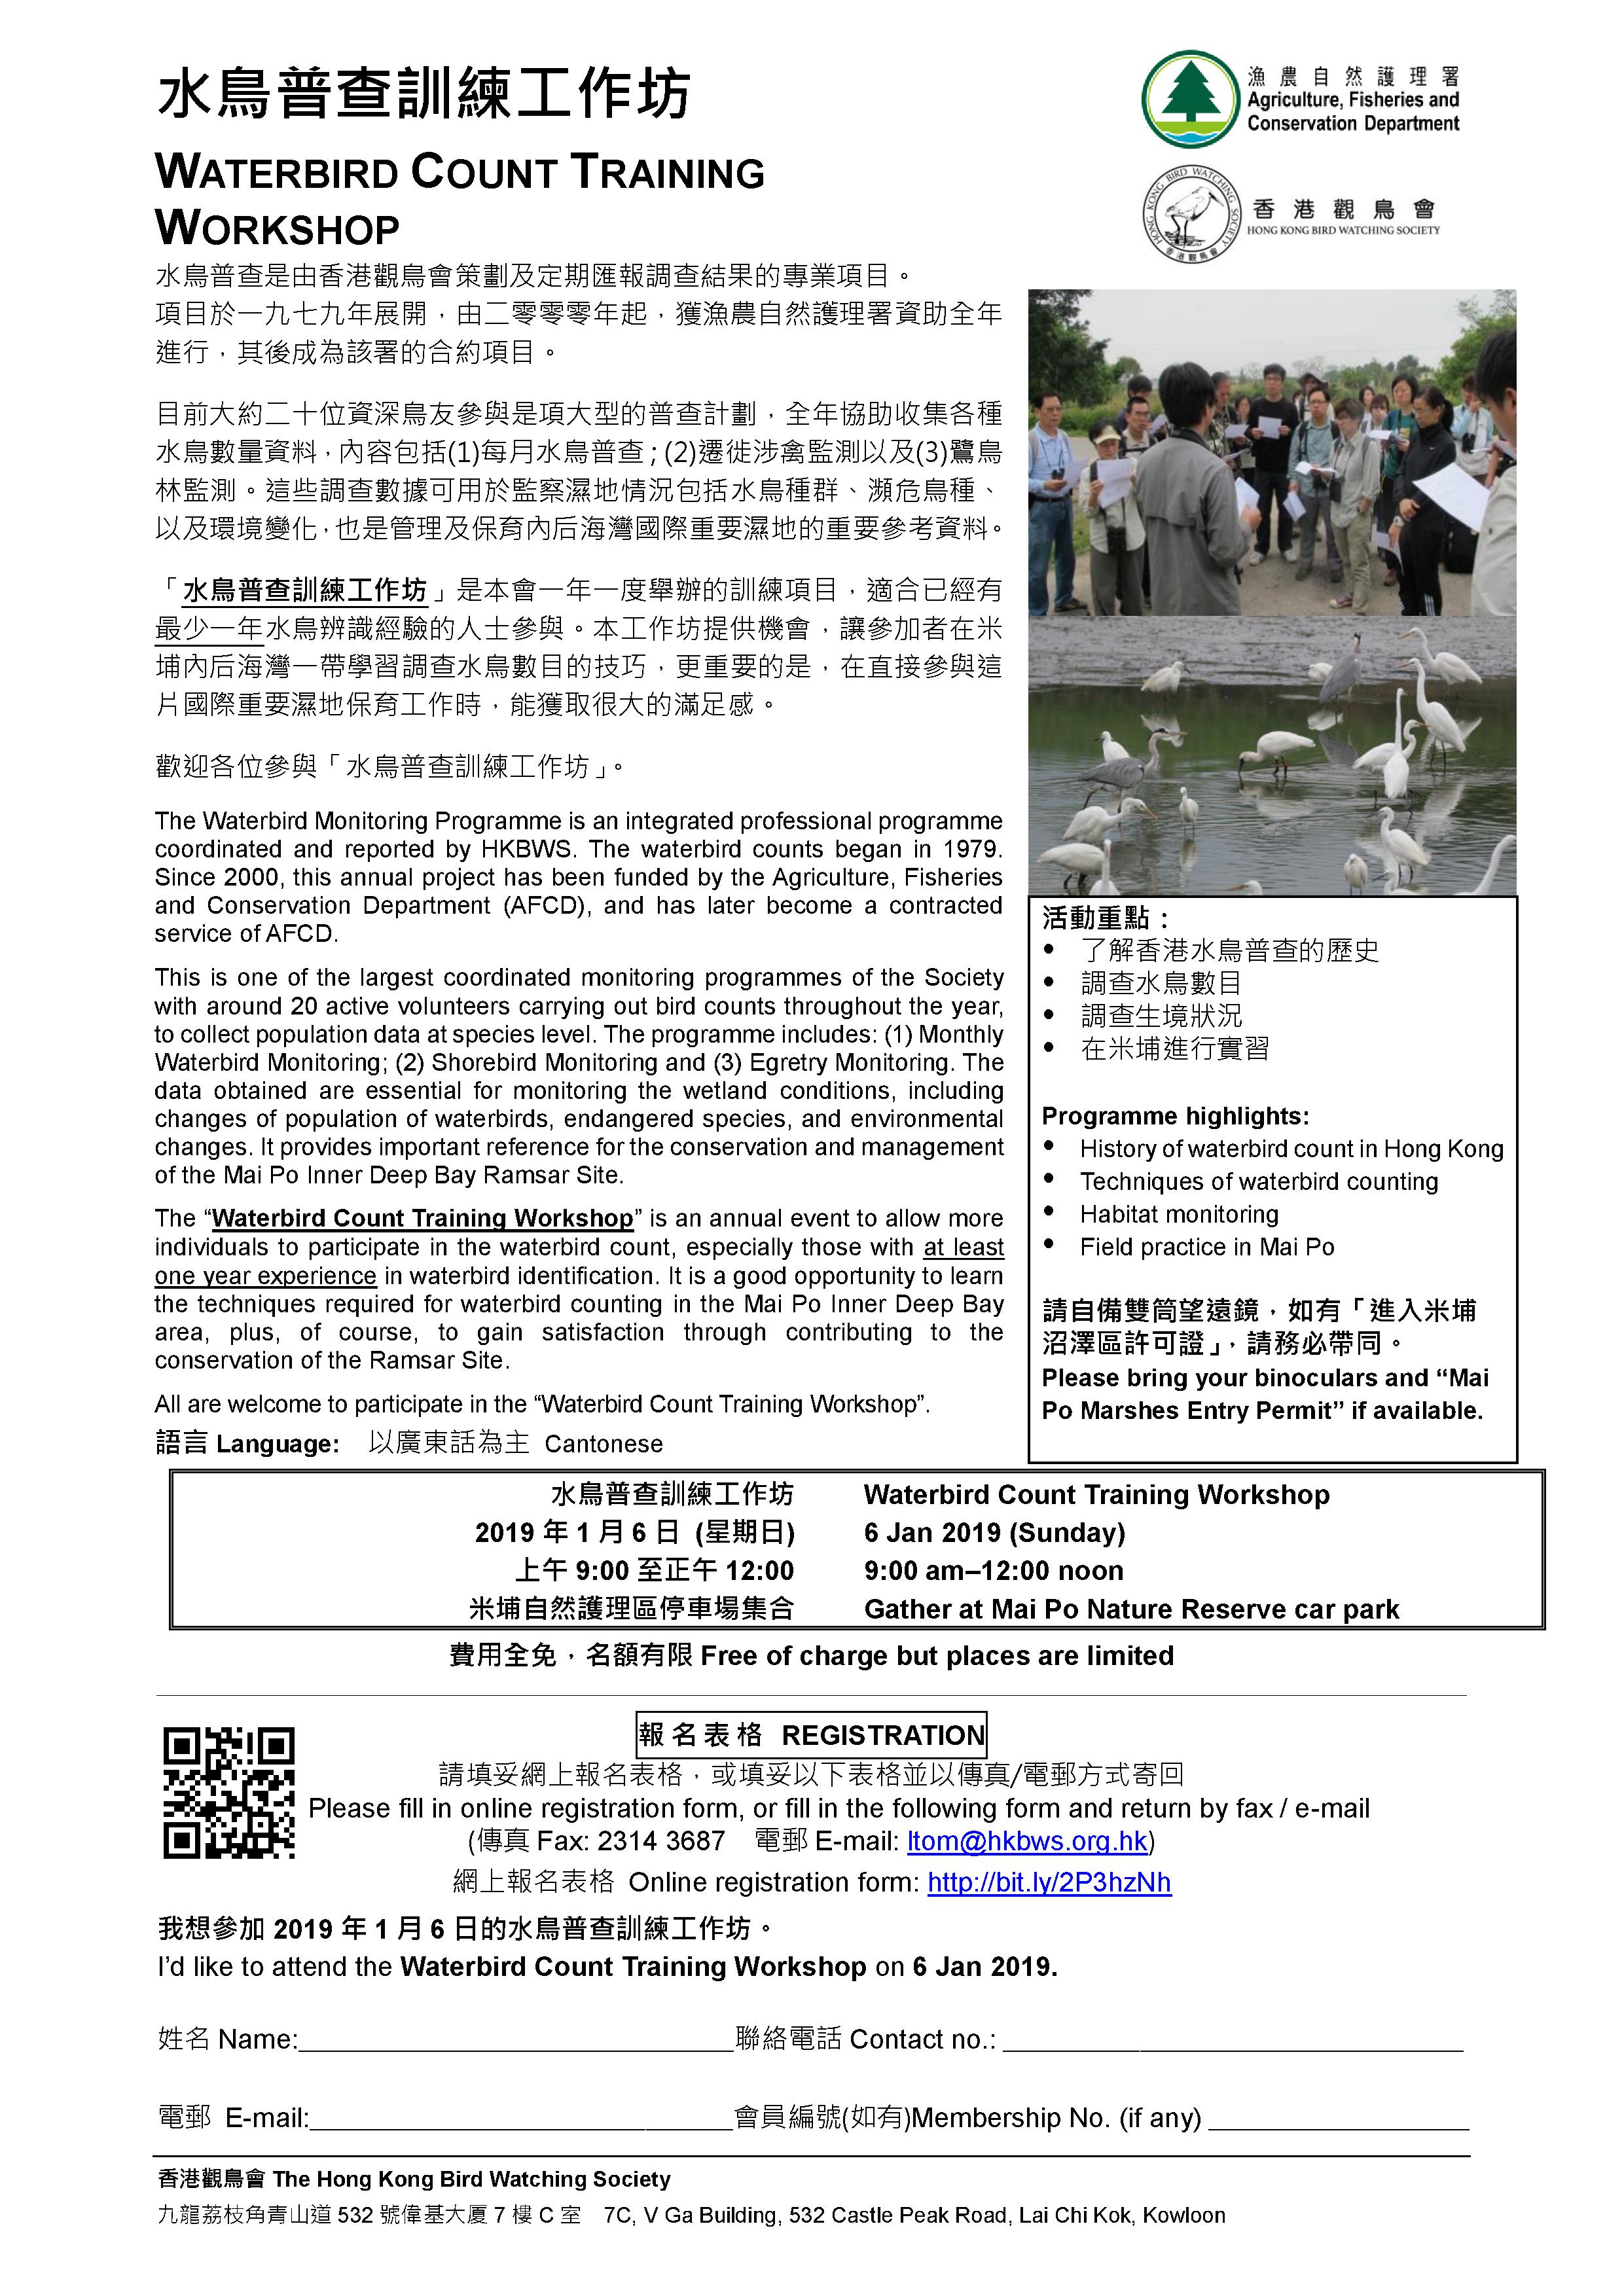 WBC_Workshop_registration_form_2019_afcd_hkbws.jpg